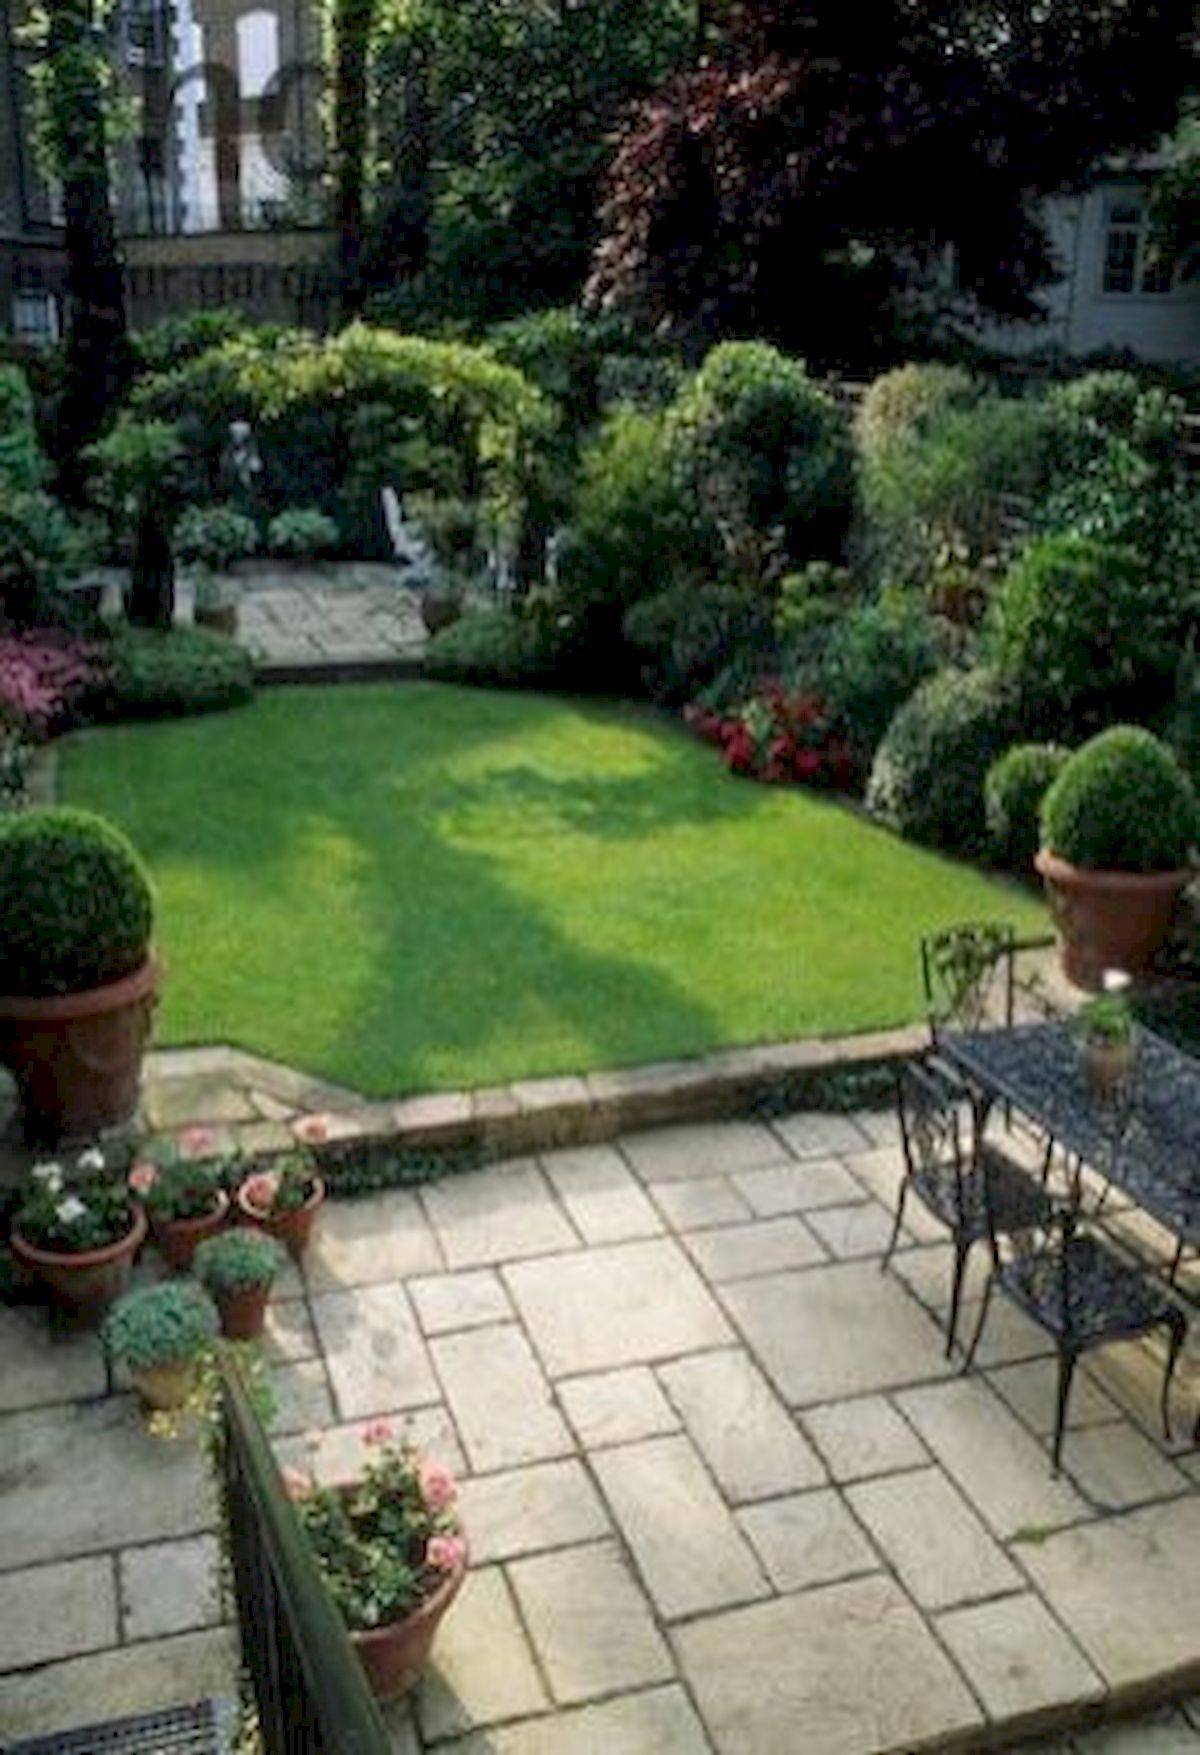 Formal Garden Designs